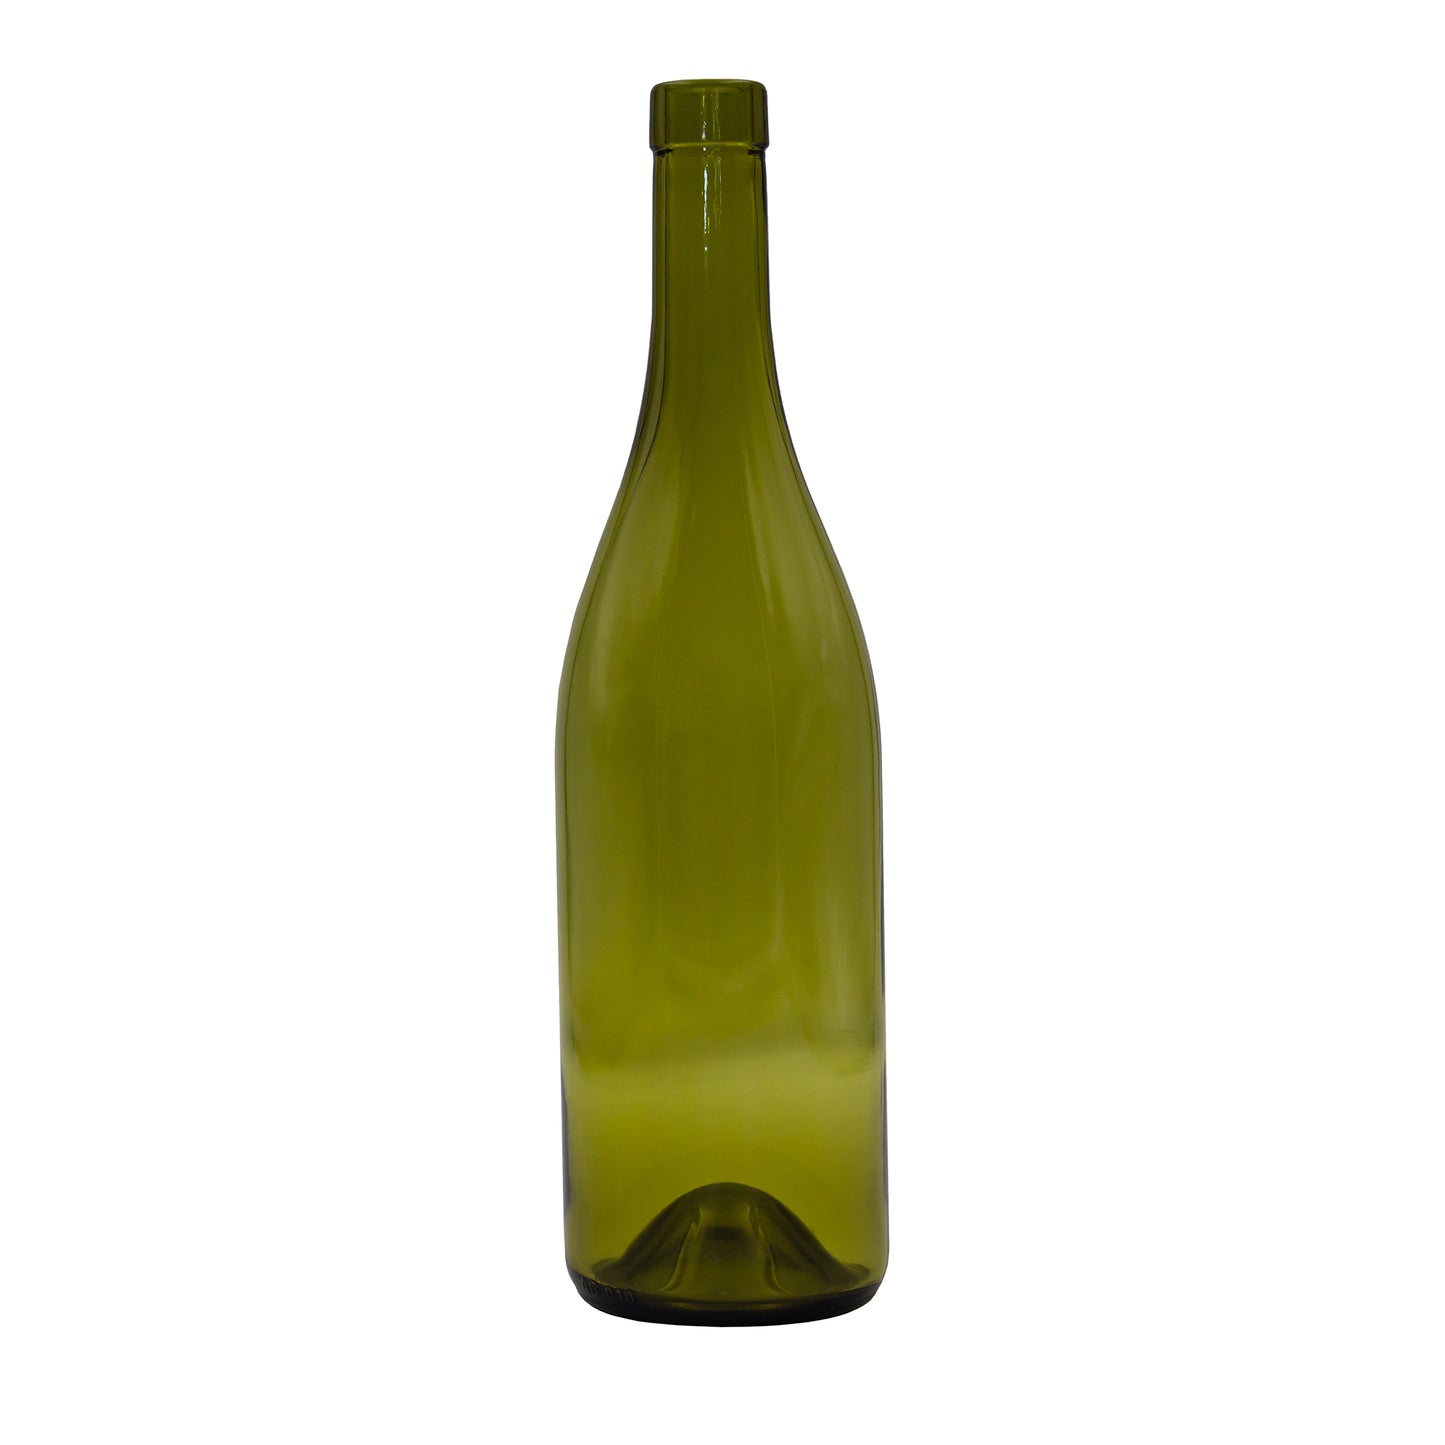 Cork top french burgundy wine bottle 750ml